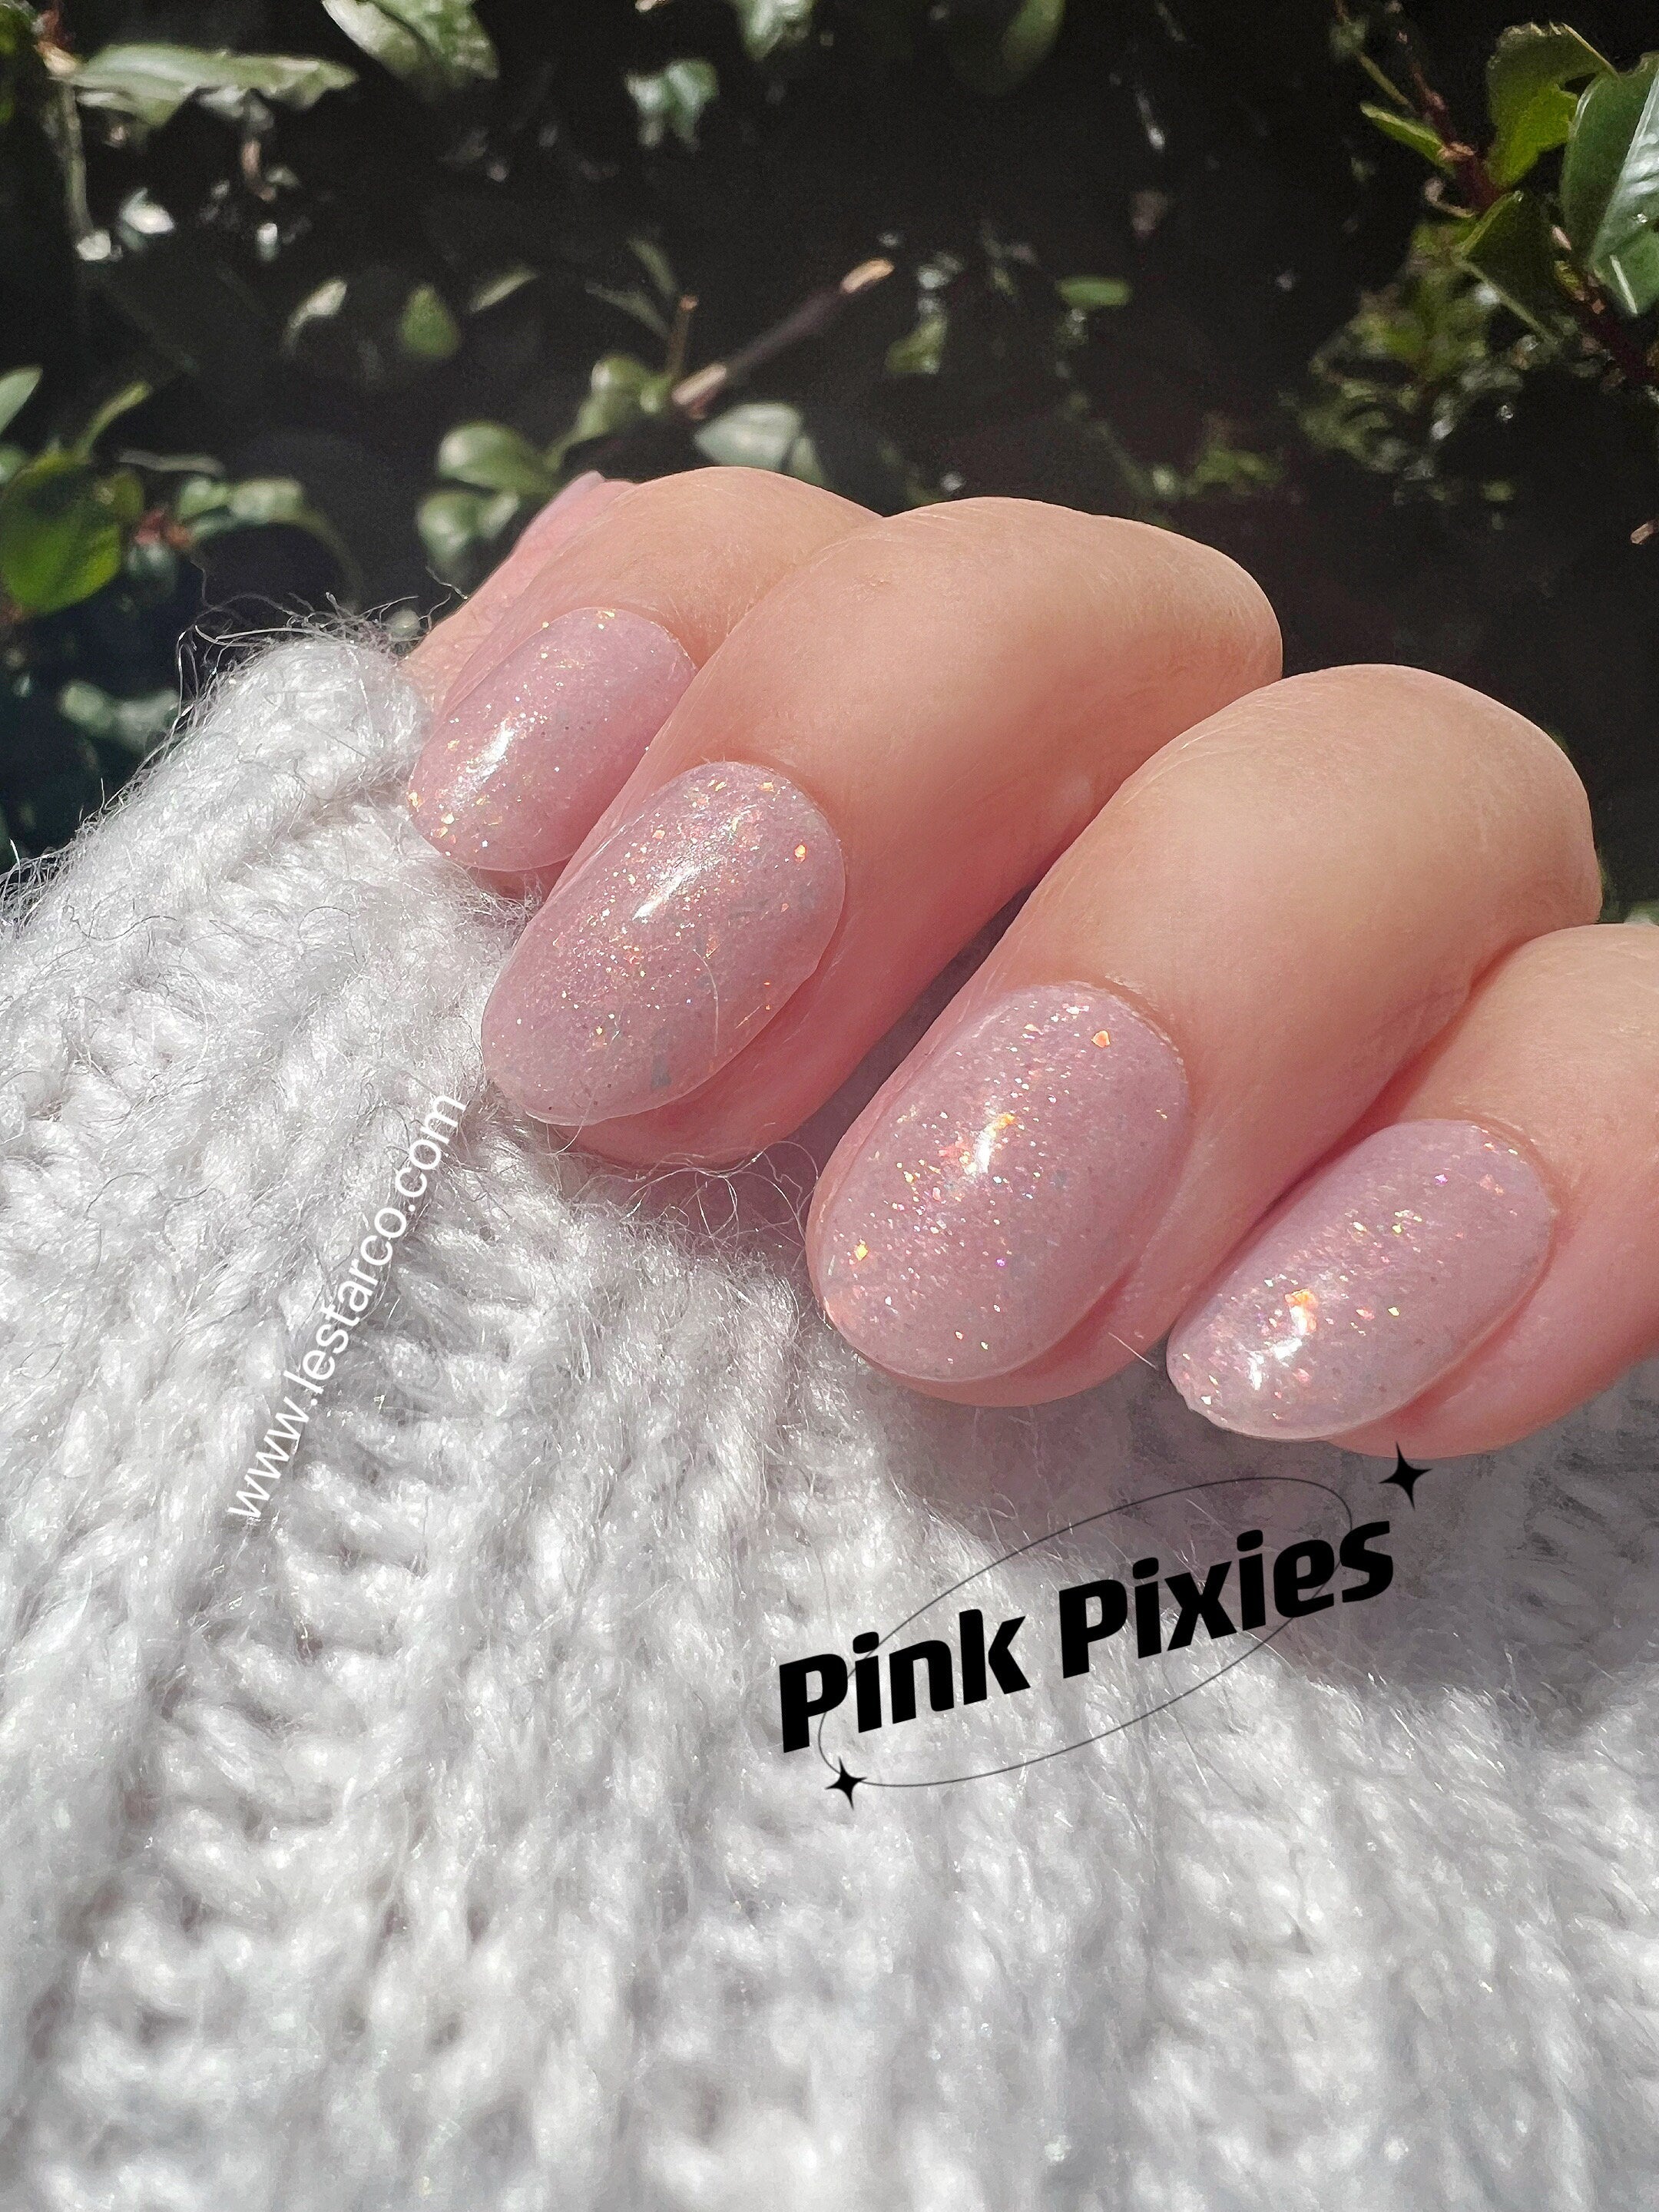 Classic Light Pink Nail Polish to Love This Season